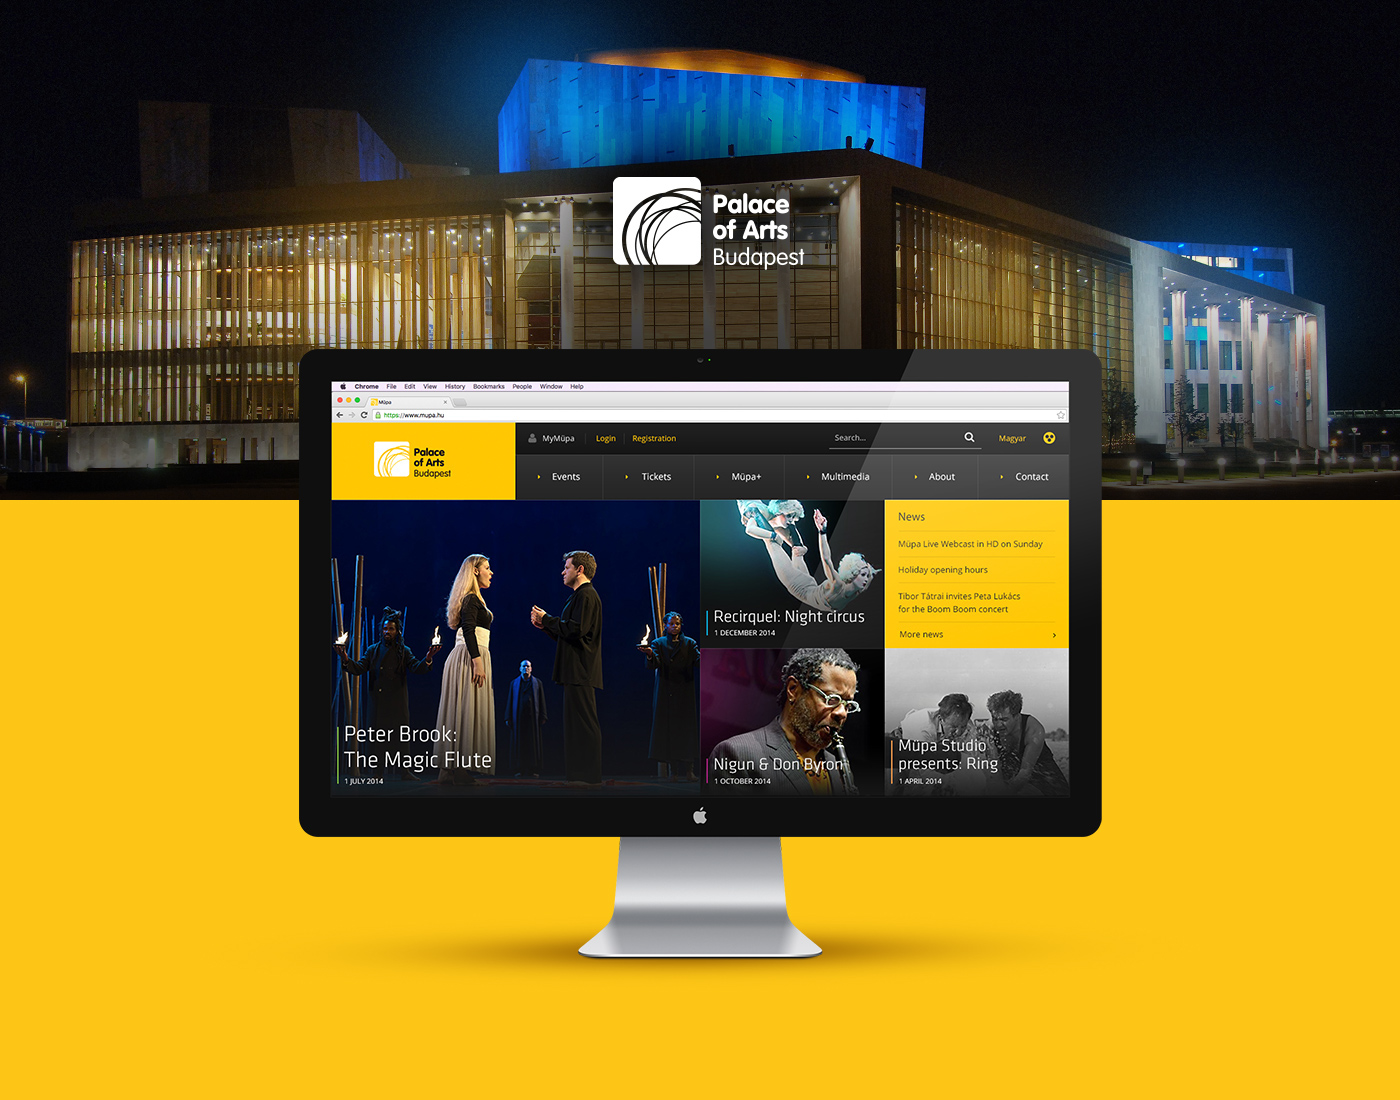 palace of arts budapest Webdesign Performance Exhibition  Programs mobile version ux UI